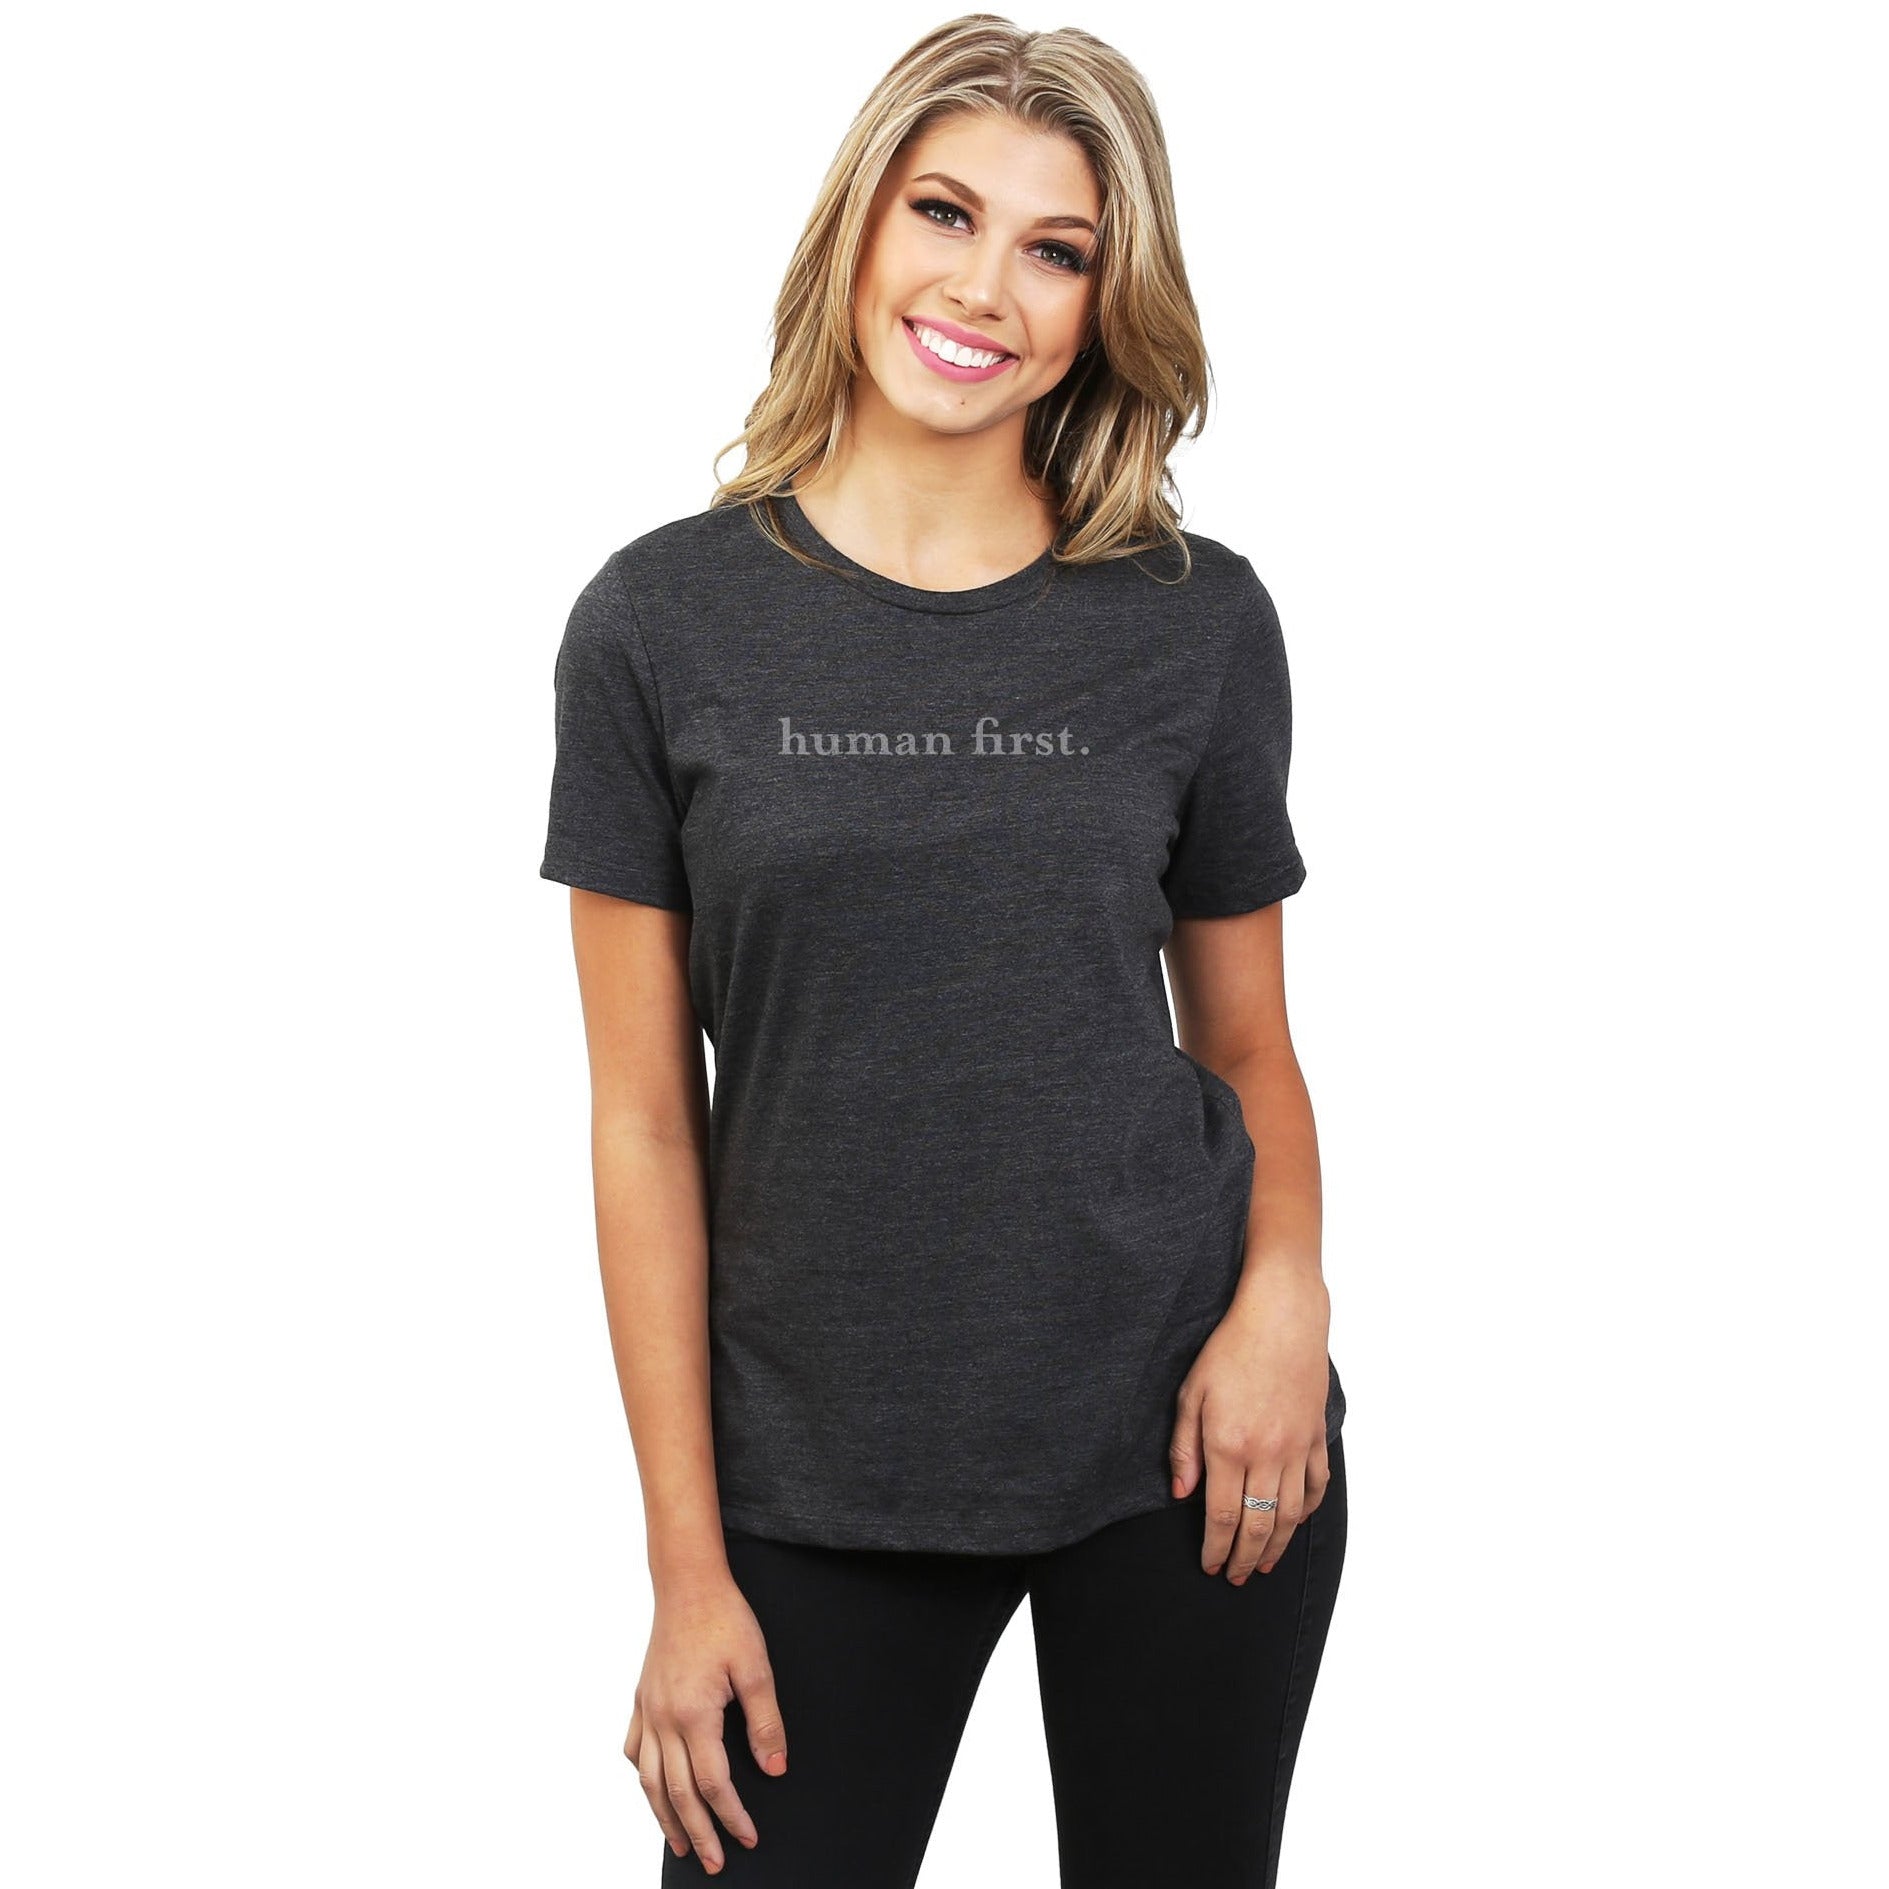 Human First Women's Relaxed Crewneck T-Shirt Top Tee Charcoal Grey Model